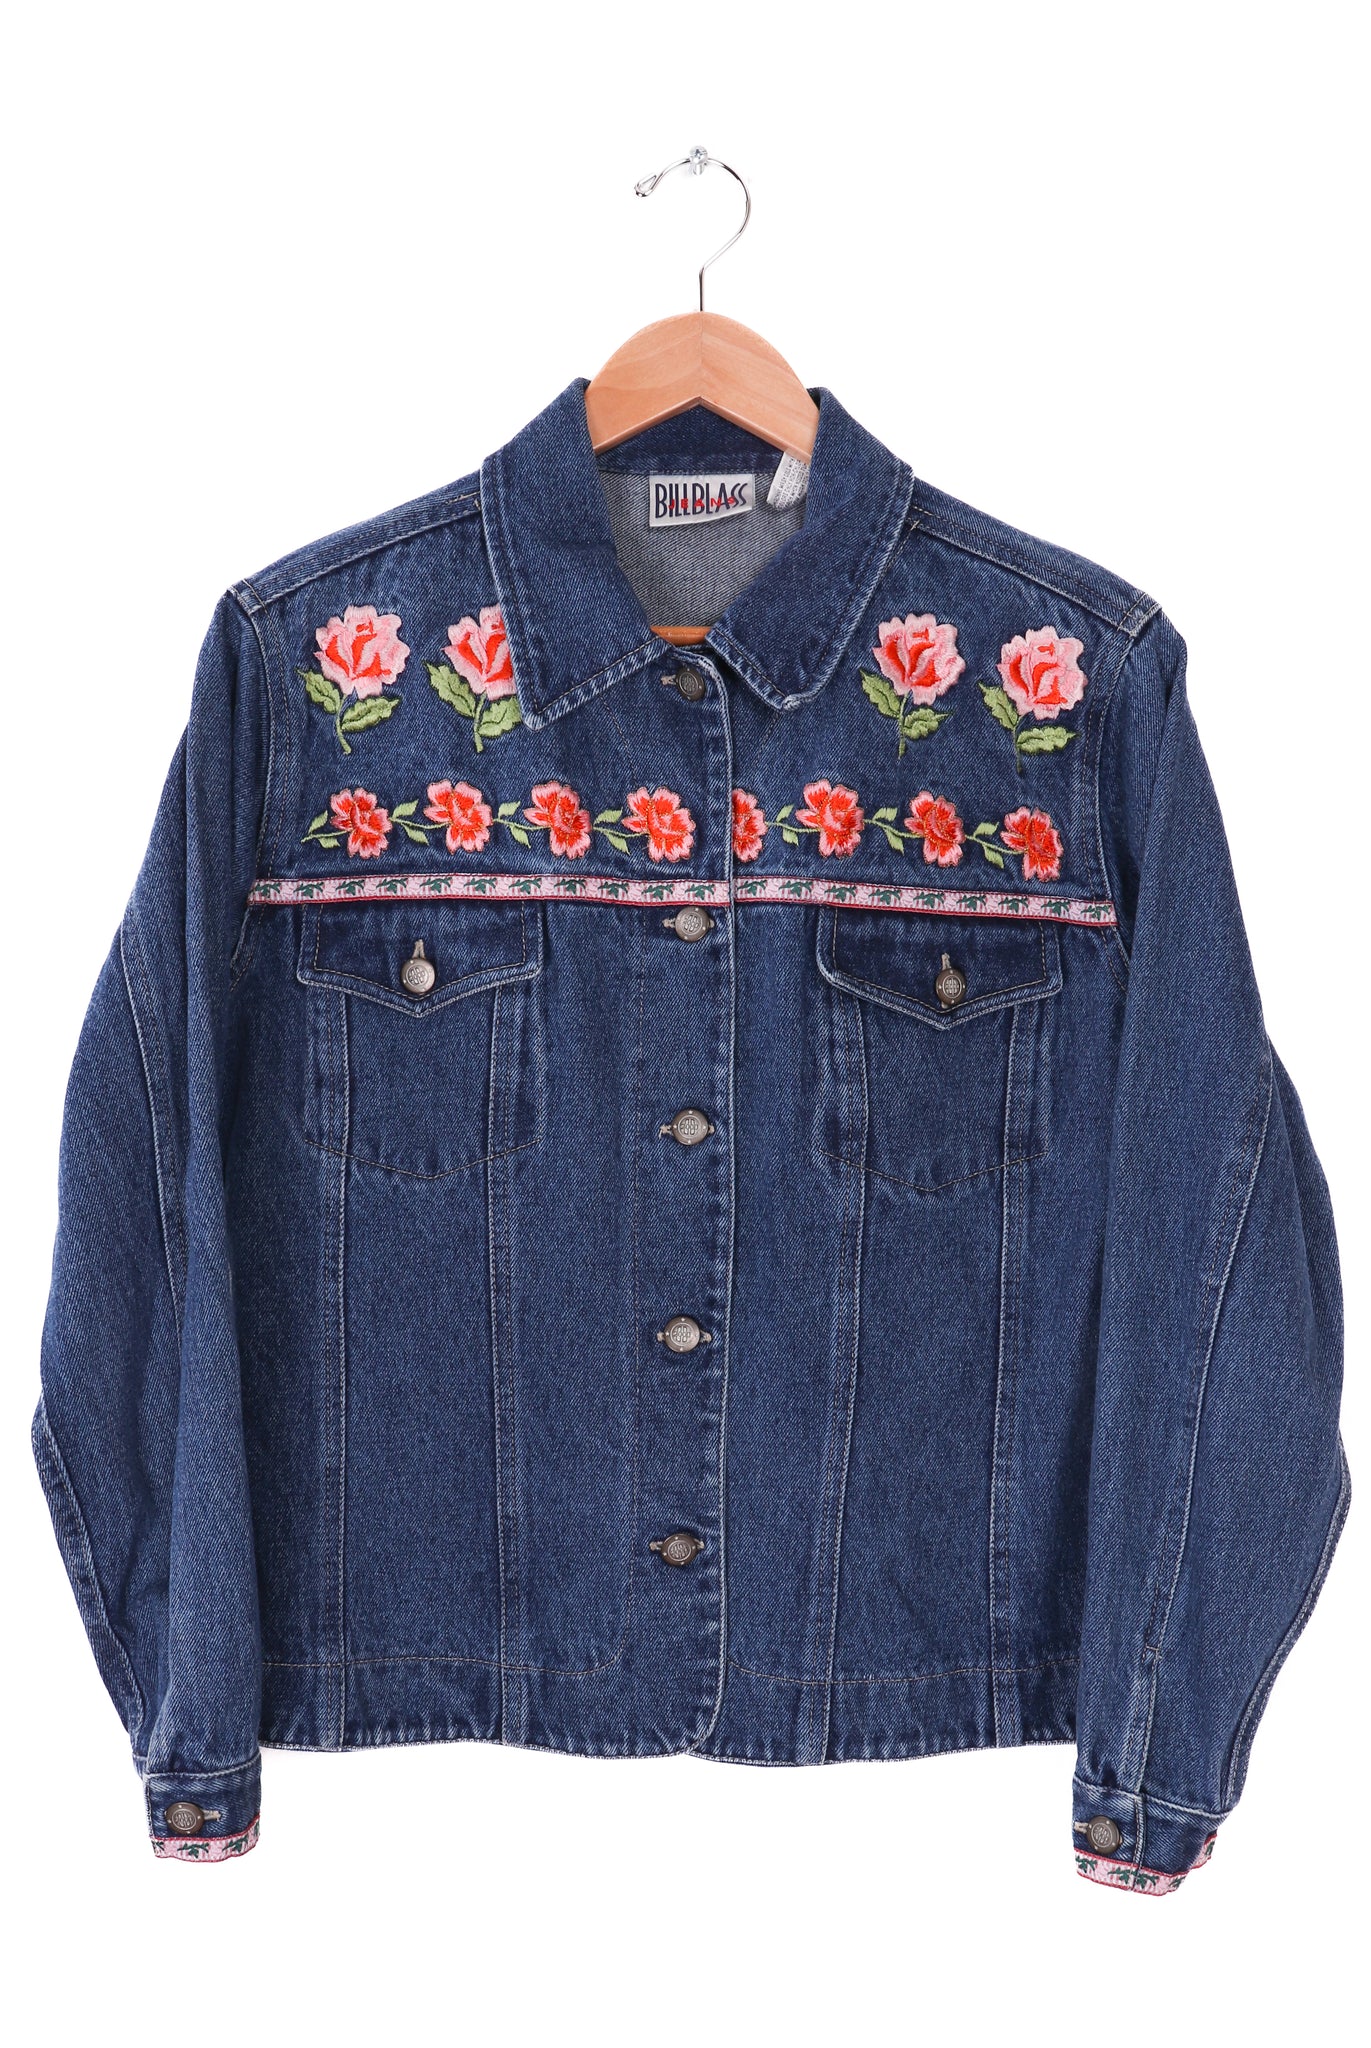 Bill Blass Jeans Pink Flowers Denim Jacket